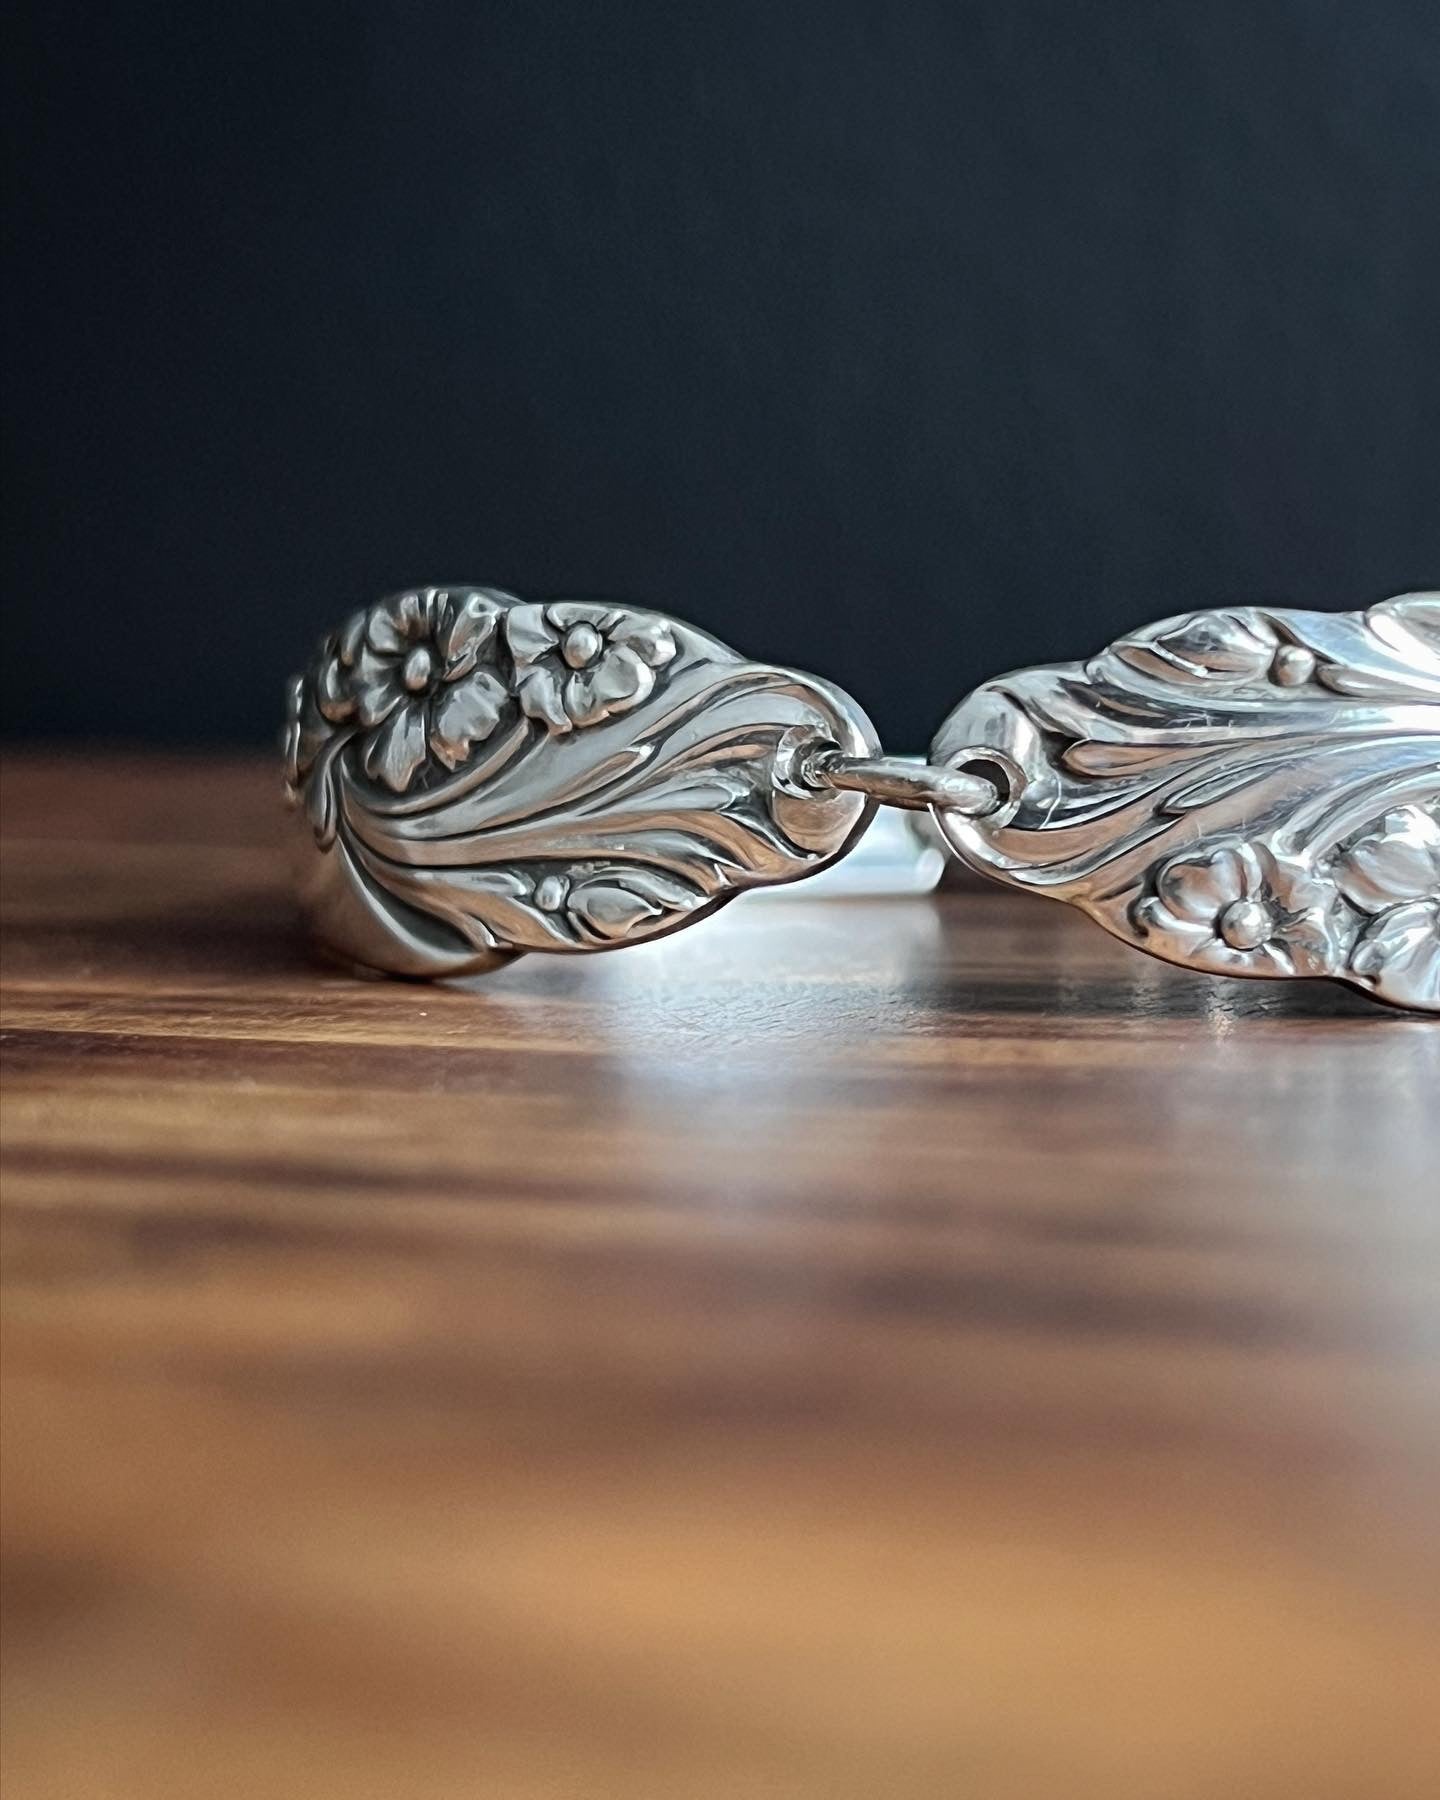 Spoon Bracelet handcrafted from antique teaspoon handles